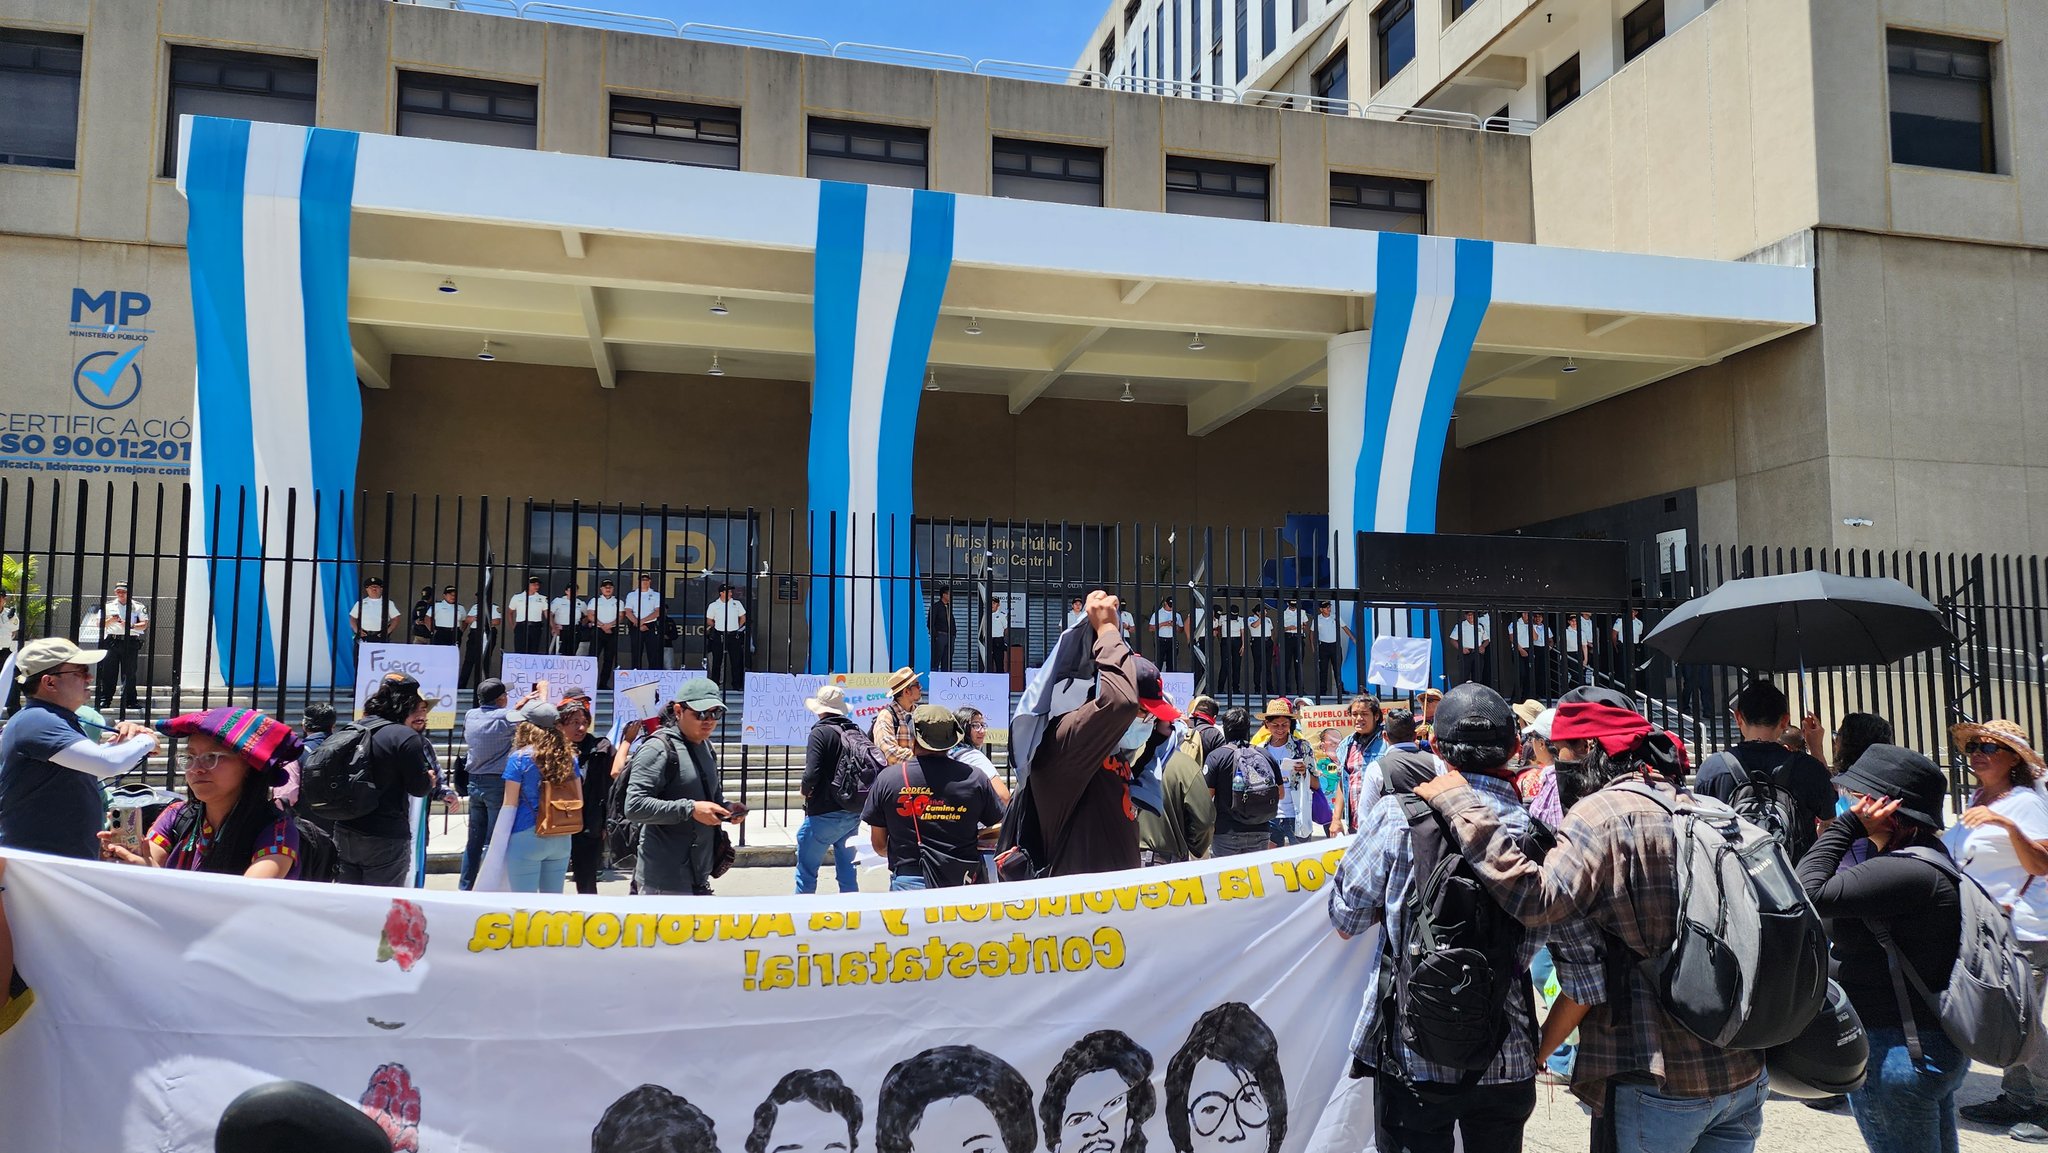 Demand resignation of prosecutors and judges in Guatemala